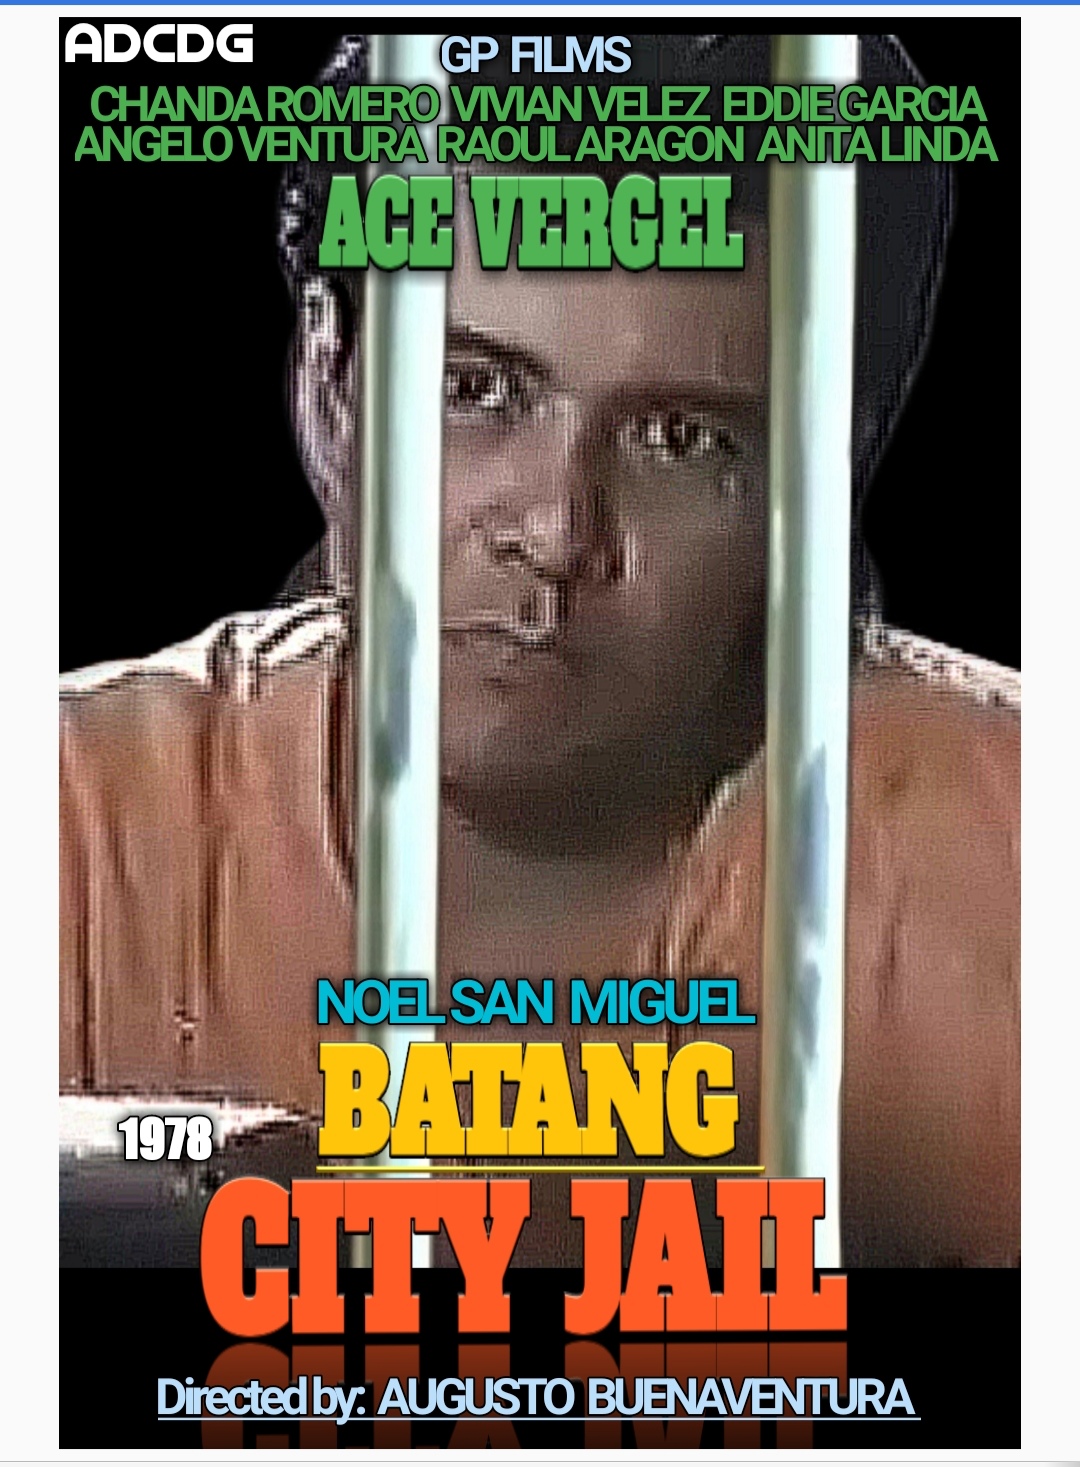 Batang City Jail